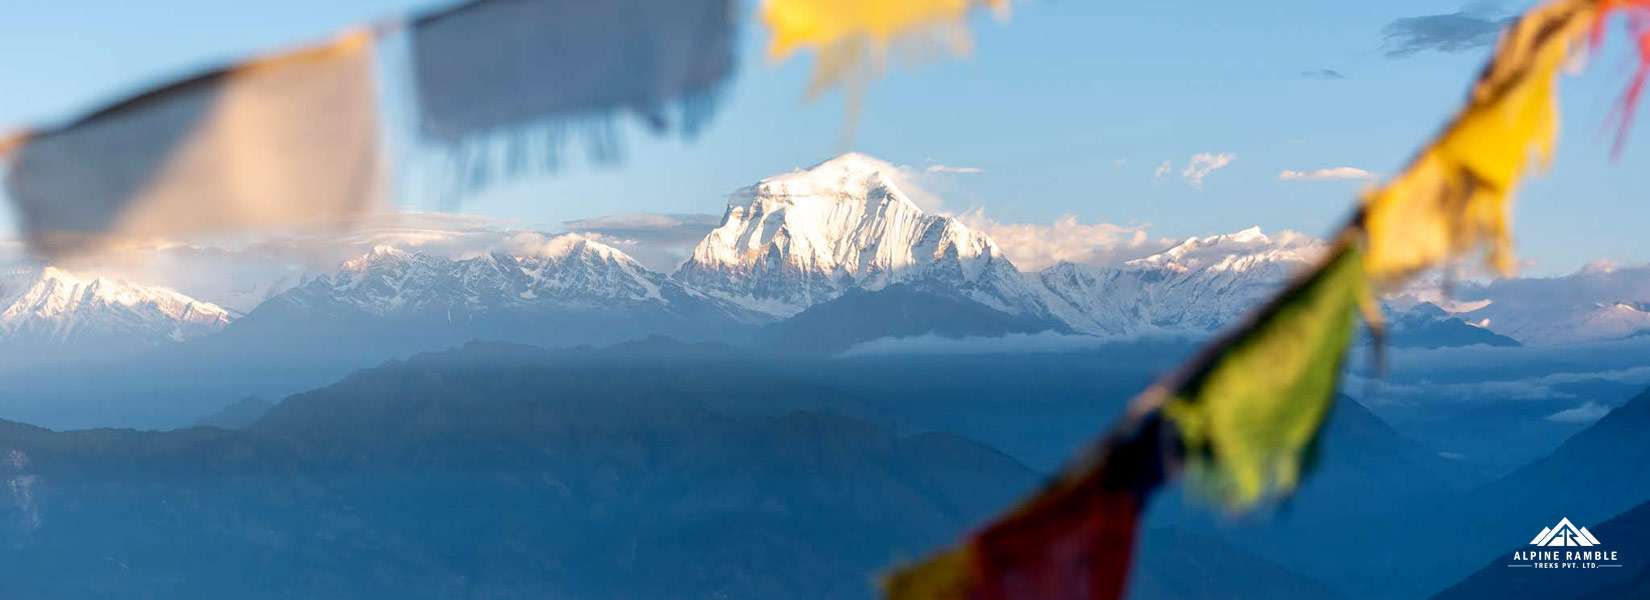 Top 5 Budget Friendly Treks in Nepal